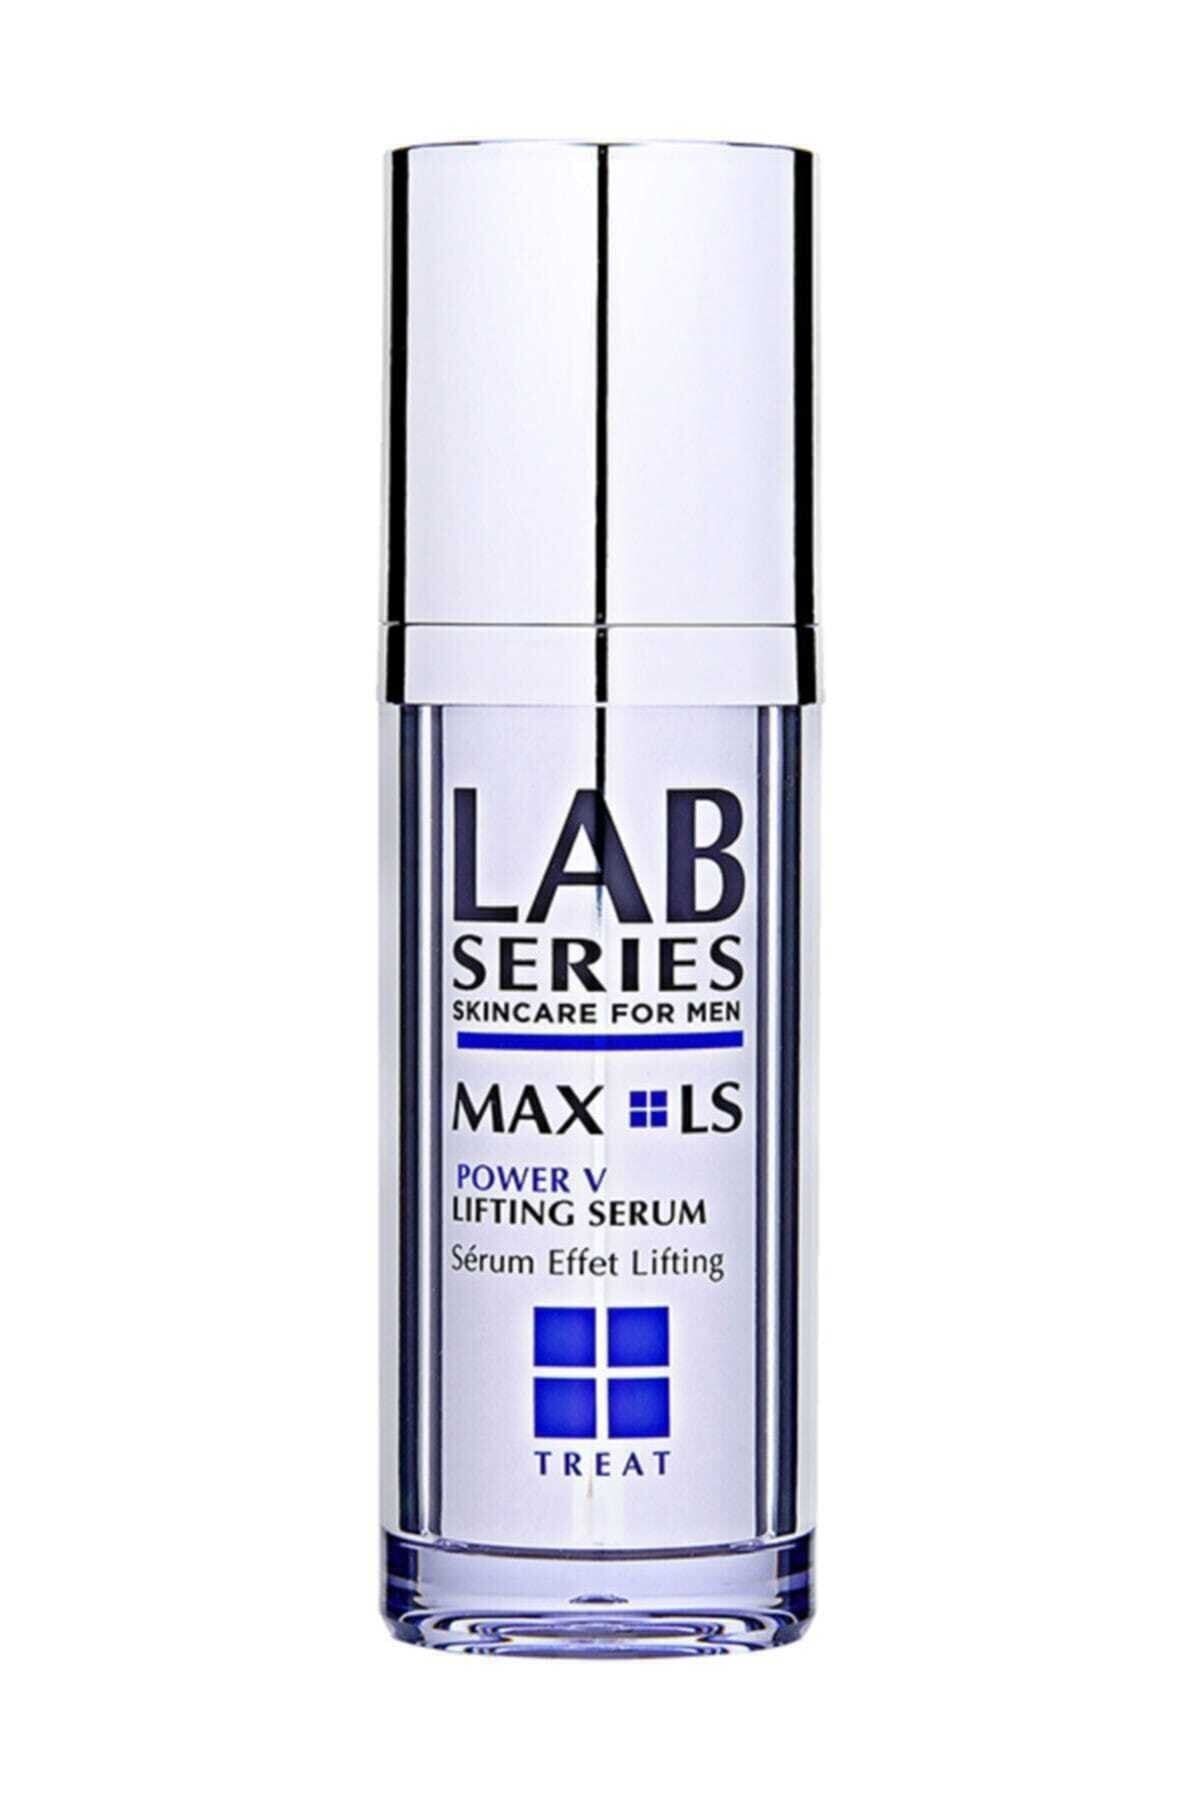 Lab Series Erkekler Için Anti Aging Serum - Power V Lifting Serum 30 ml 022548350539